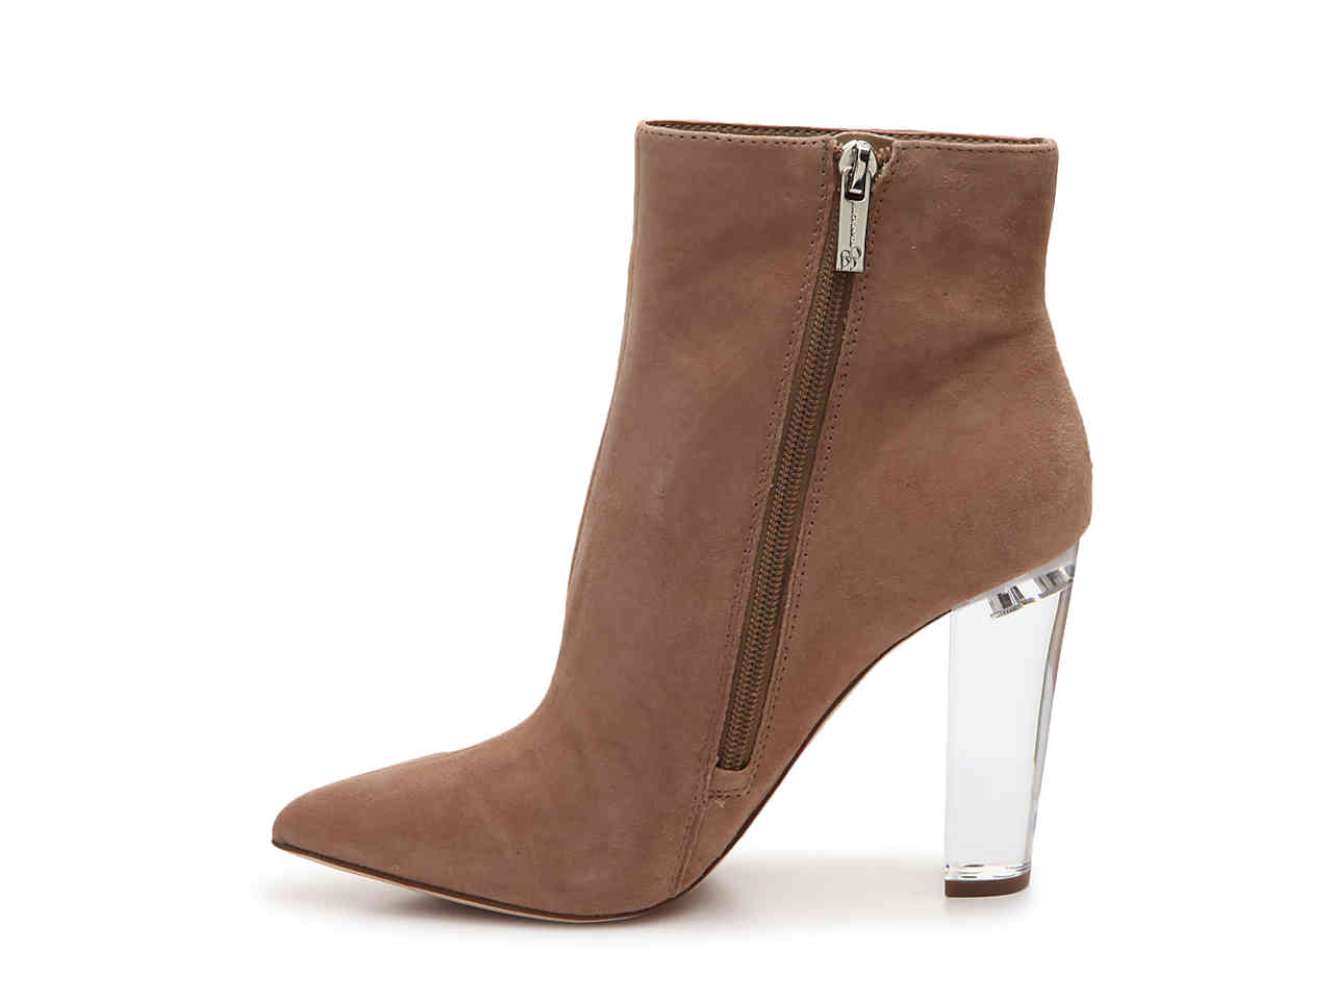 Jessica Simpson Womens teddi Closed Toe Ankle Fashion Boots, Fawny, Size 8.0 t1c | eBay1333 x 1000